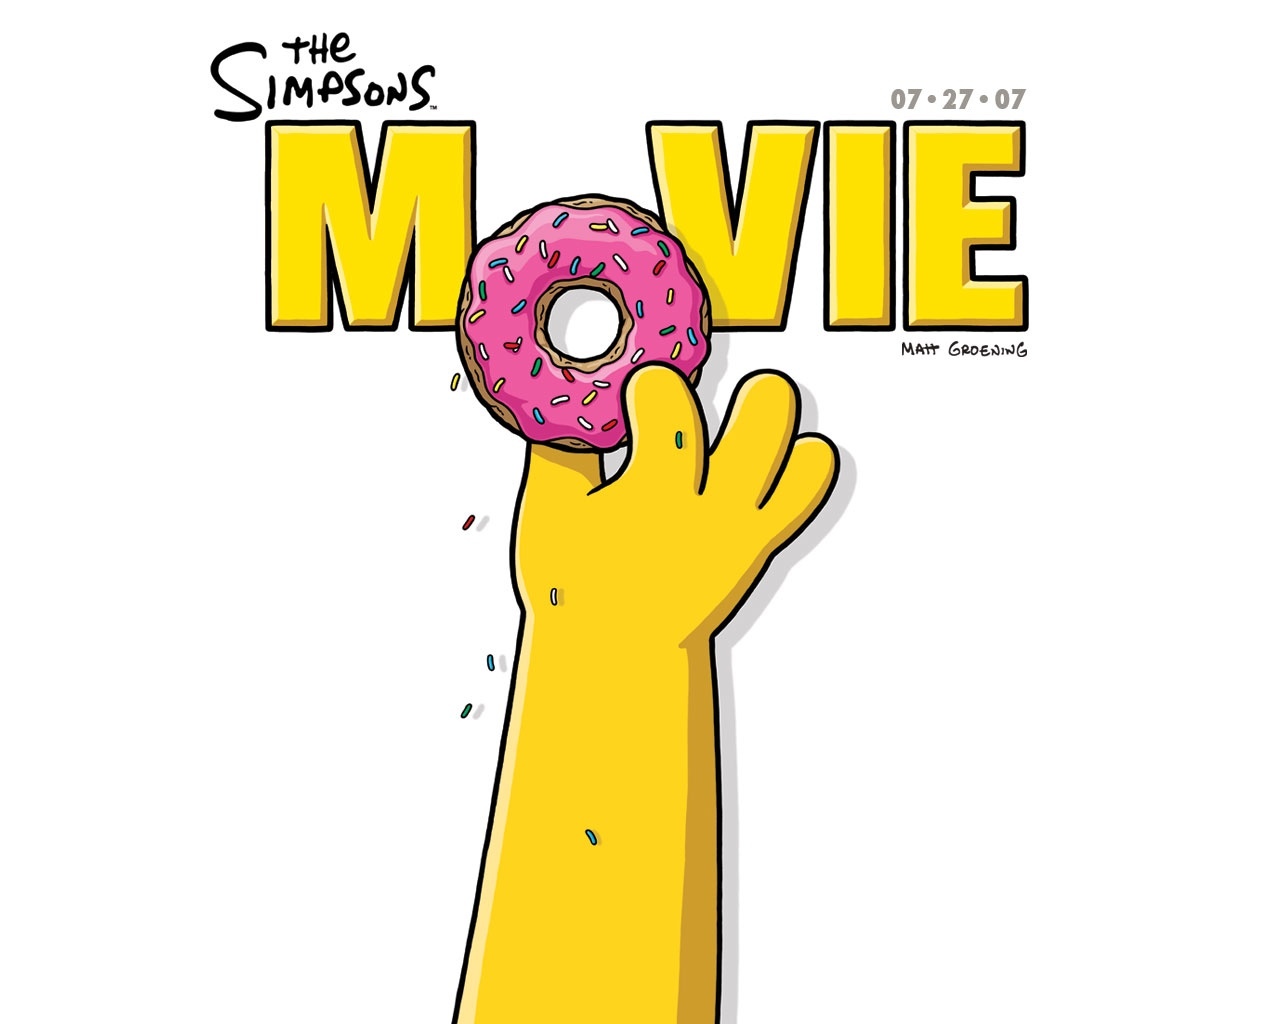 "The Simpsons Movie" desktop wallpaper (1280 x 1024 pixels)